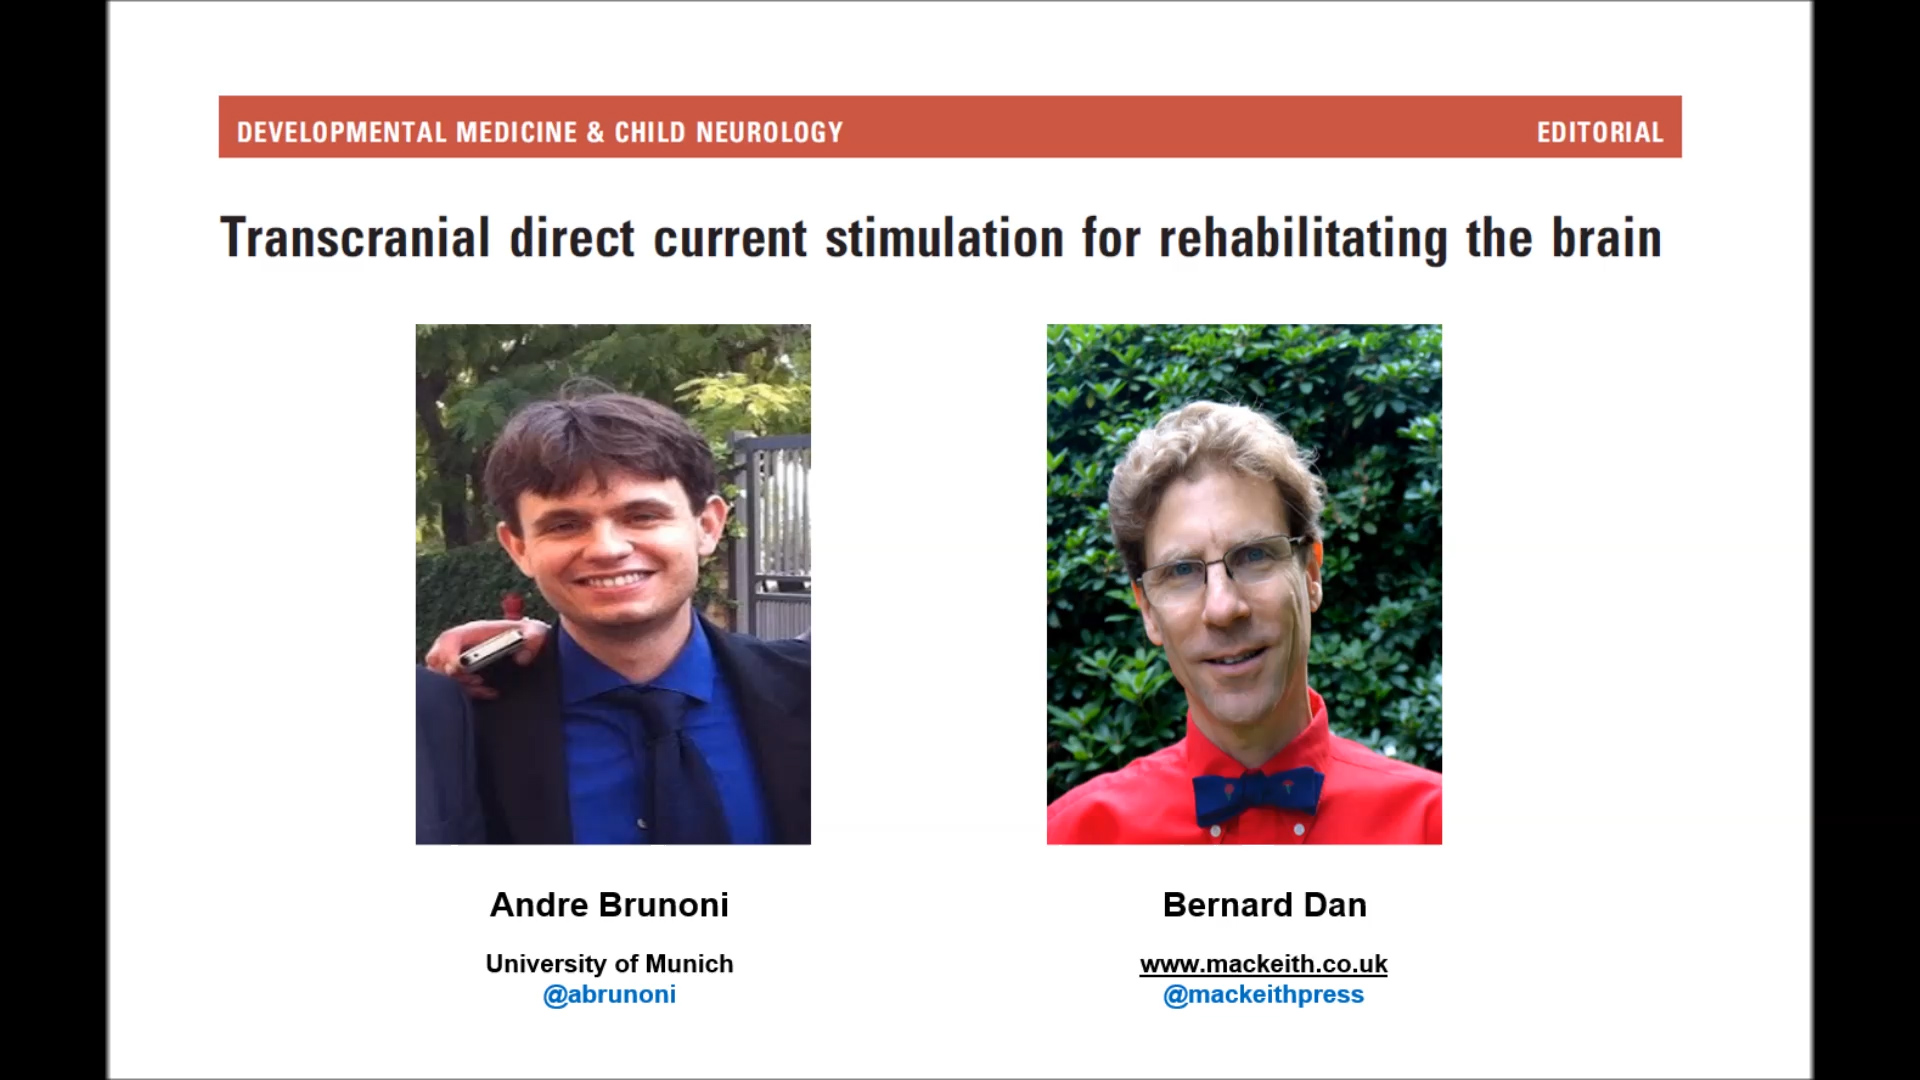 Transcranial Direct Current Stimulation for Rehabilitating the Brain | Andre Brunoni | DMCN